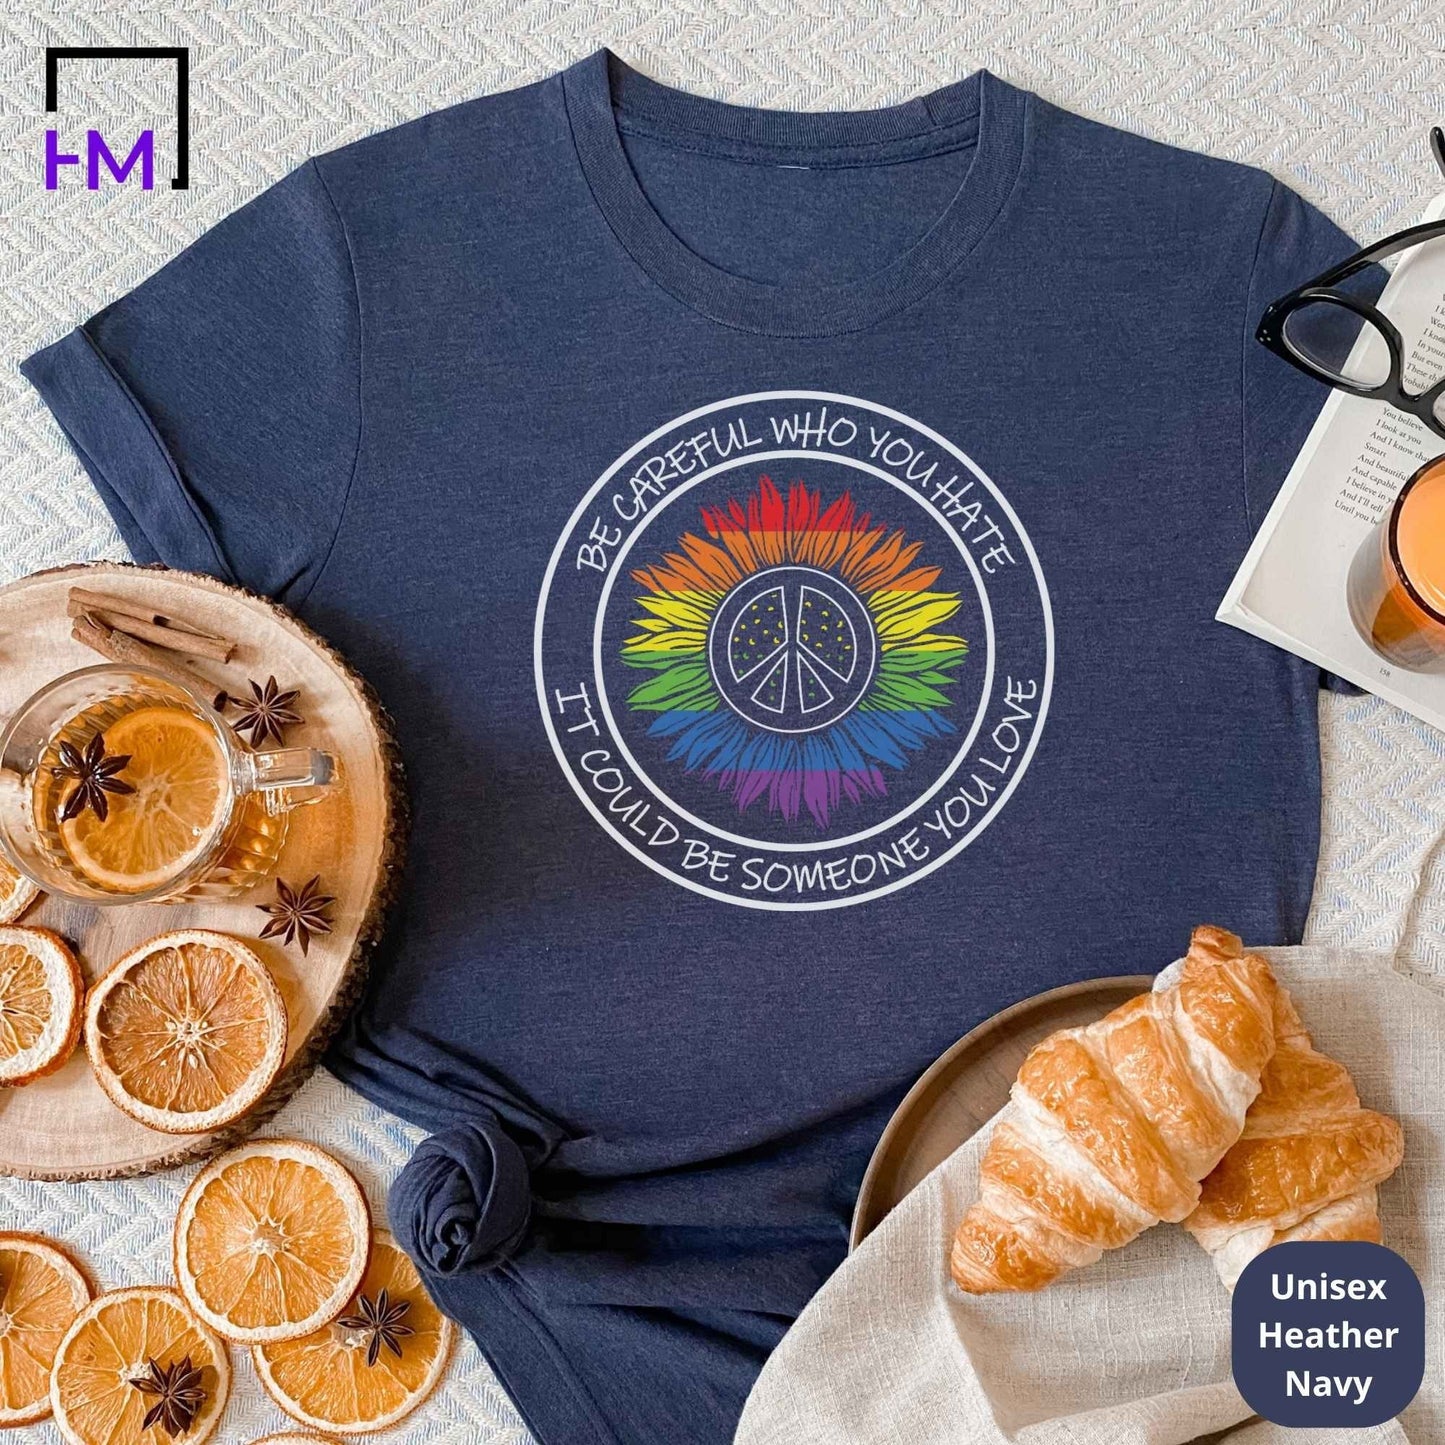 Lgbt Pride T-Shirts, LGBT Shirt, Be Kind Shirt, Love is Love Shirt, Be Kind Gift, Kindness Graphic Tee, Gay Shirt, Sunflower LGBT Women Tees HMDesignStudioUS